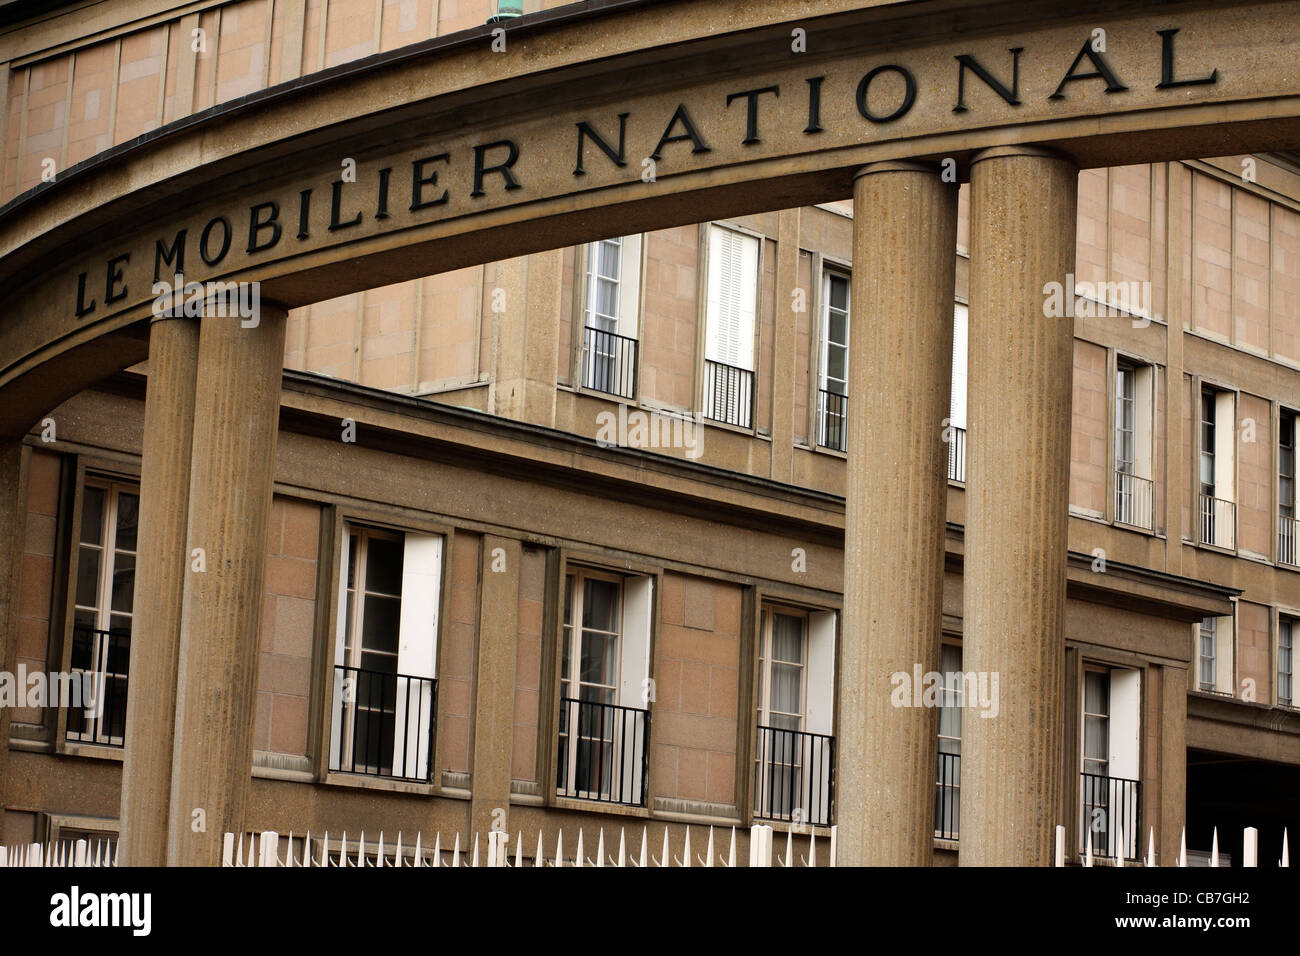 Mobilier National, Paris, France Stock Photo